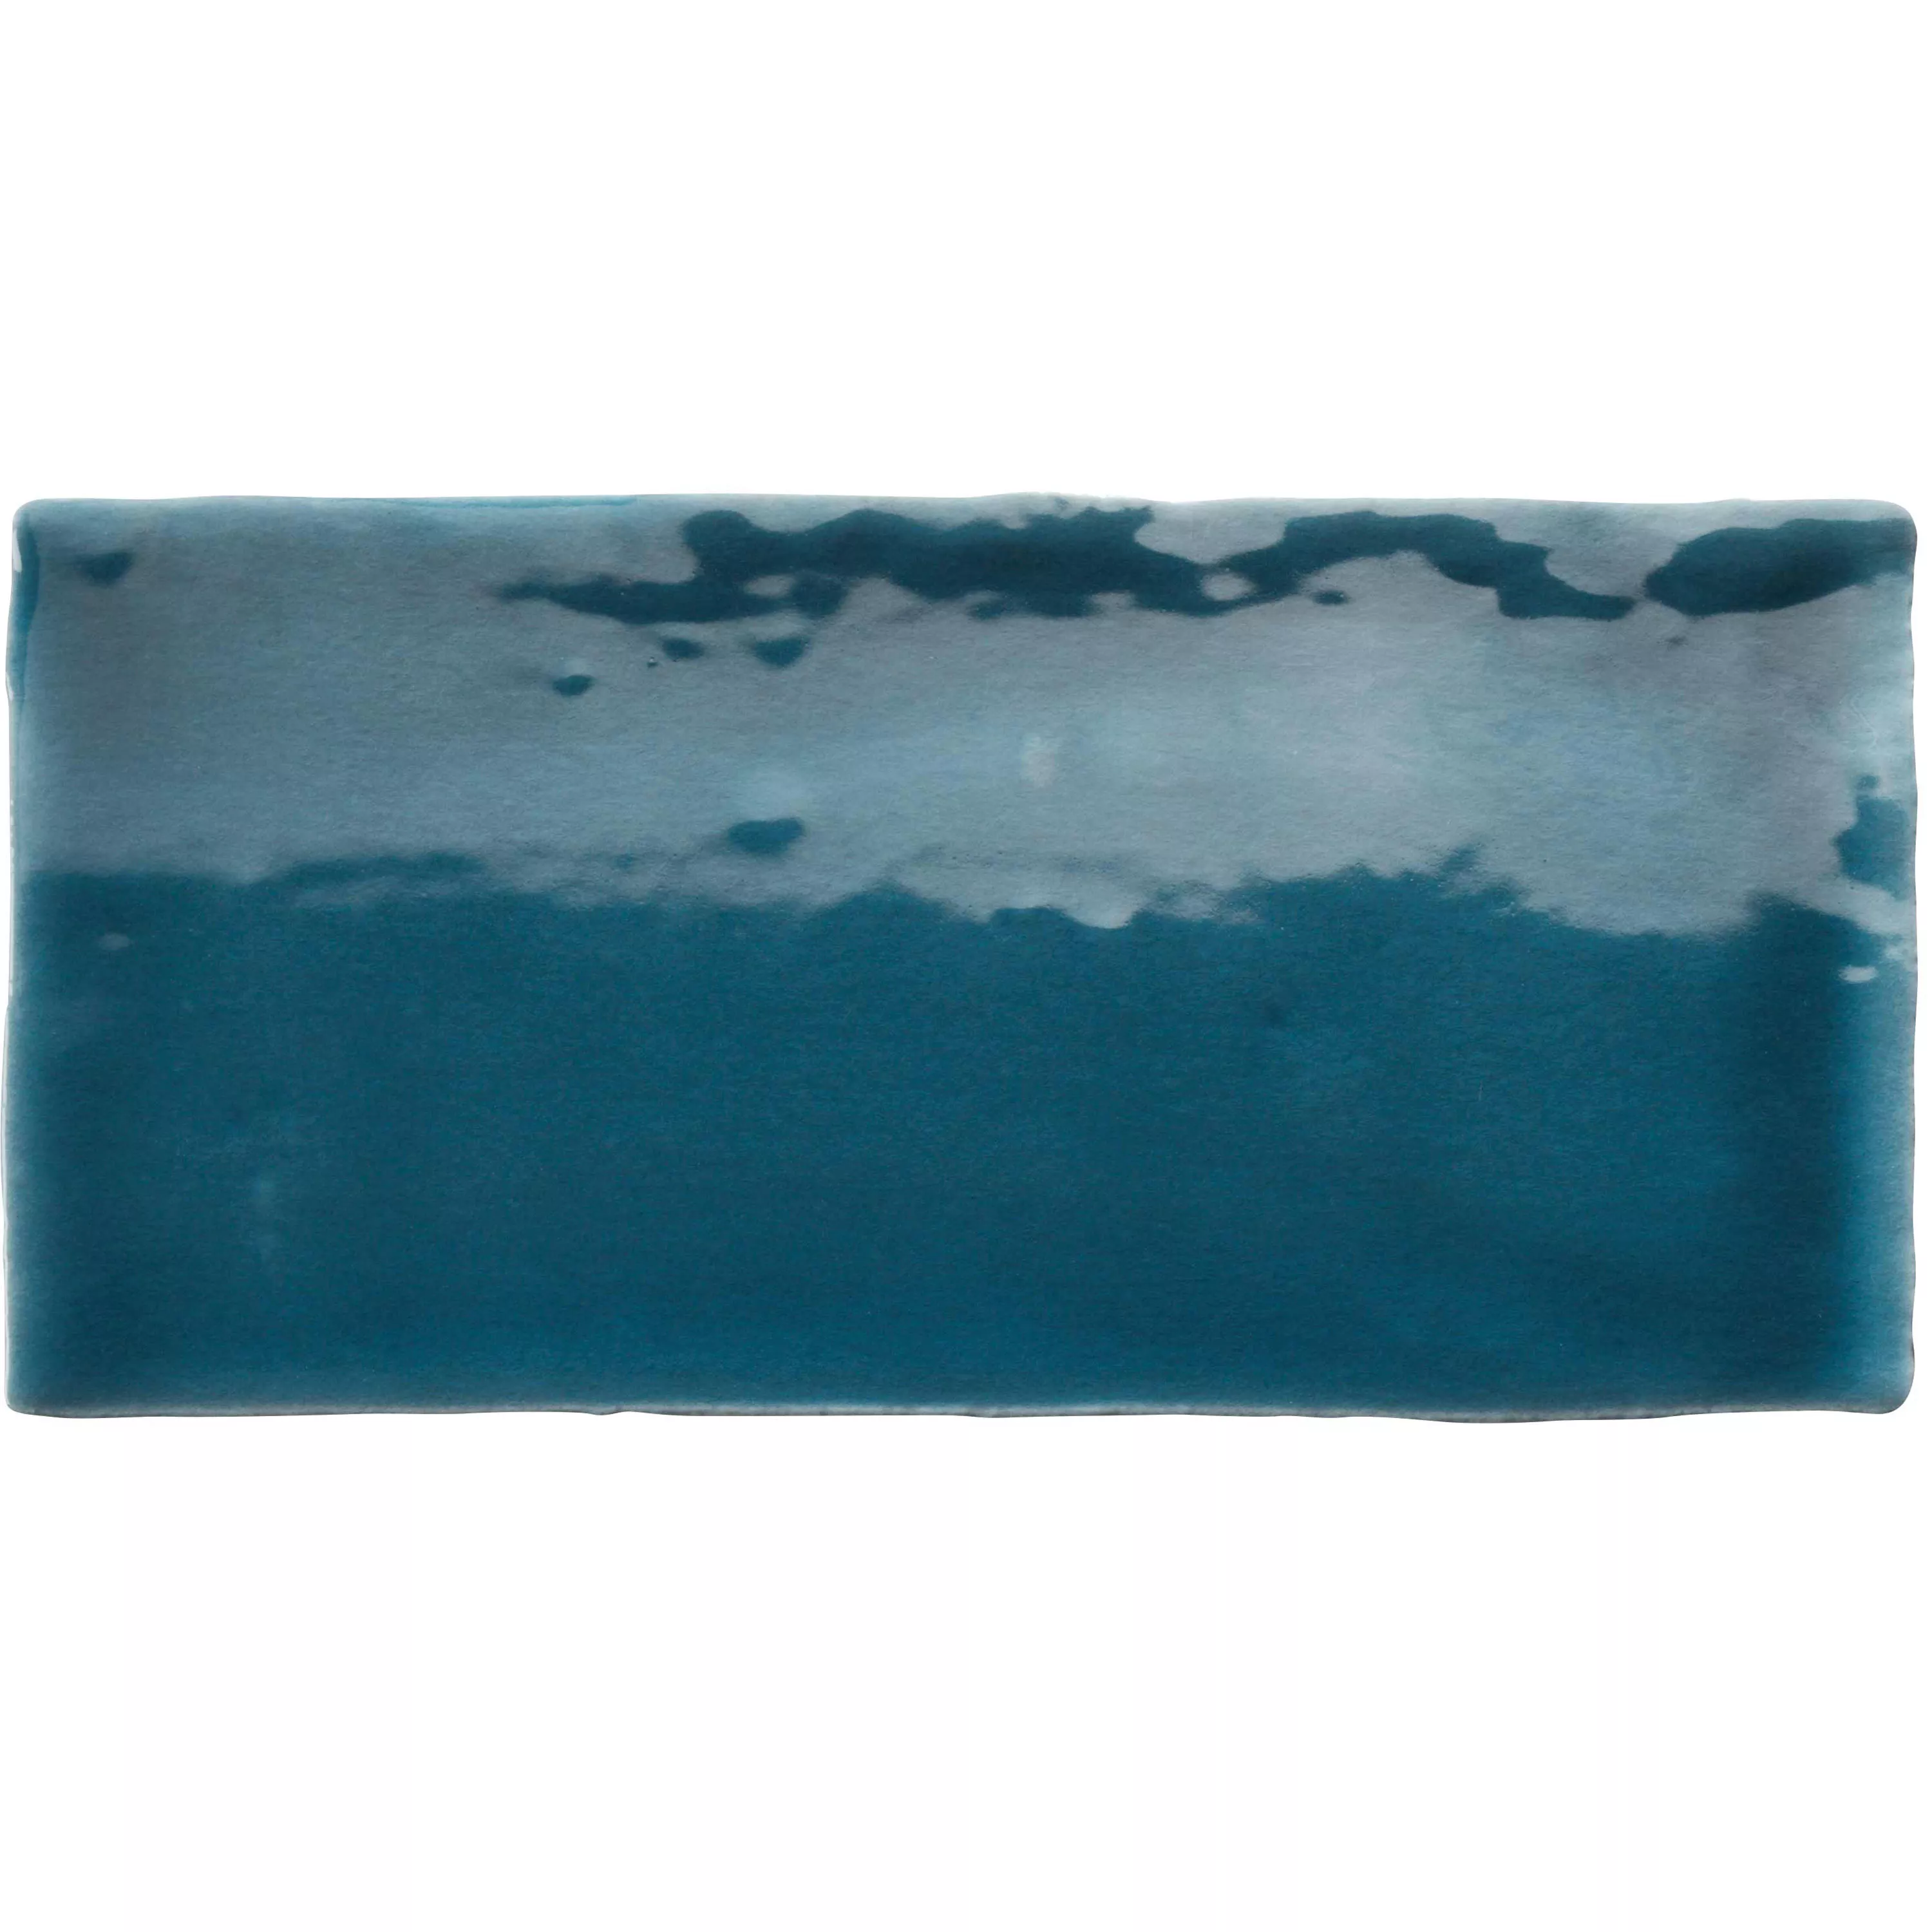 Sample Wall Tile Algier Hand Made 7,5x15cm Dark Blue